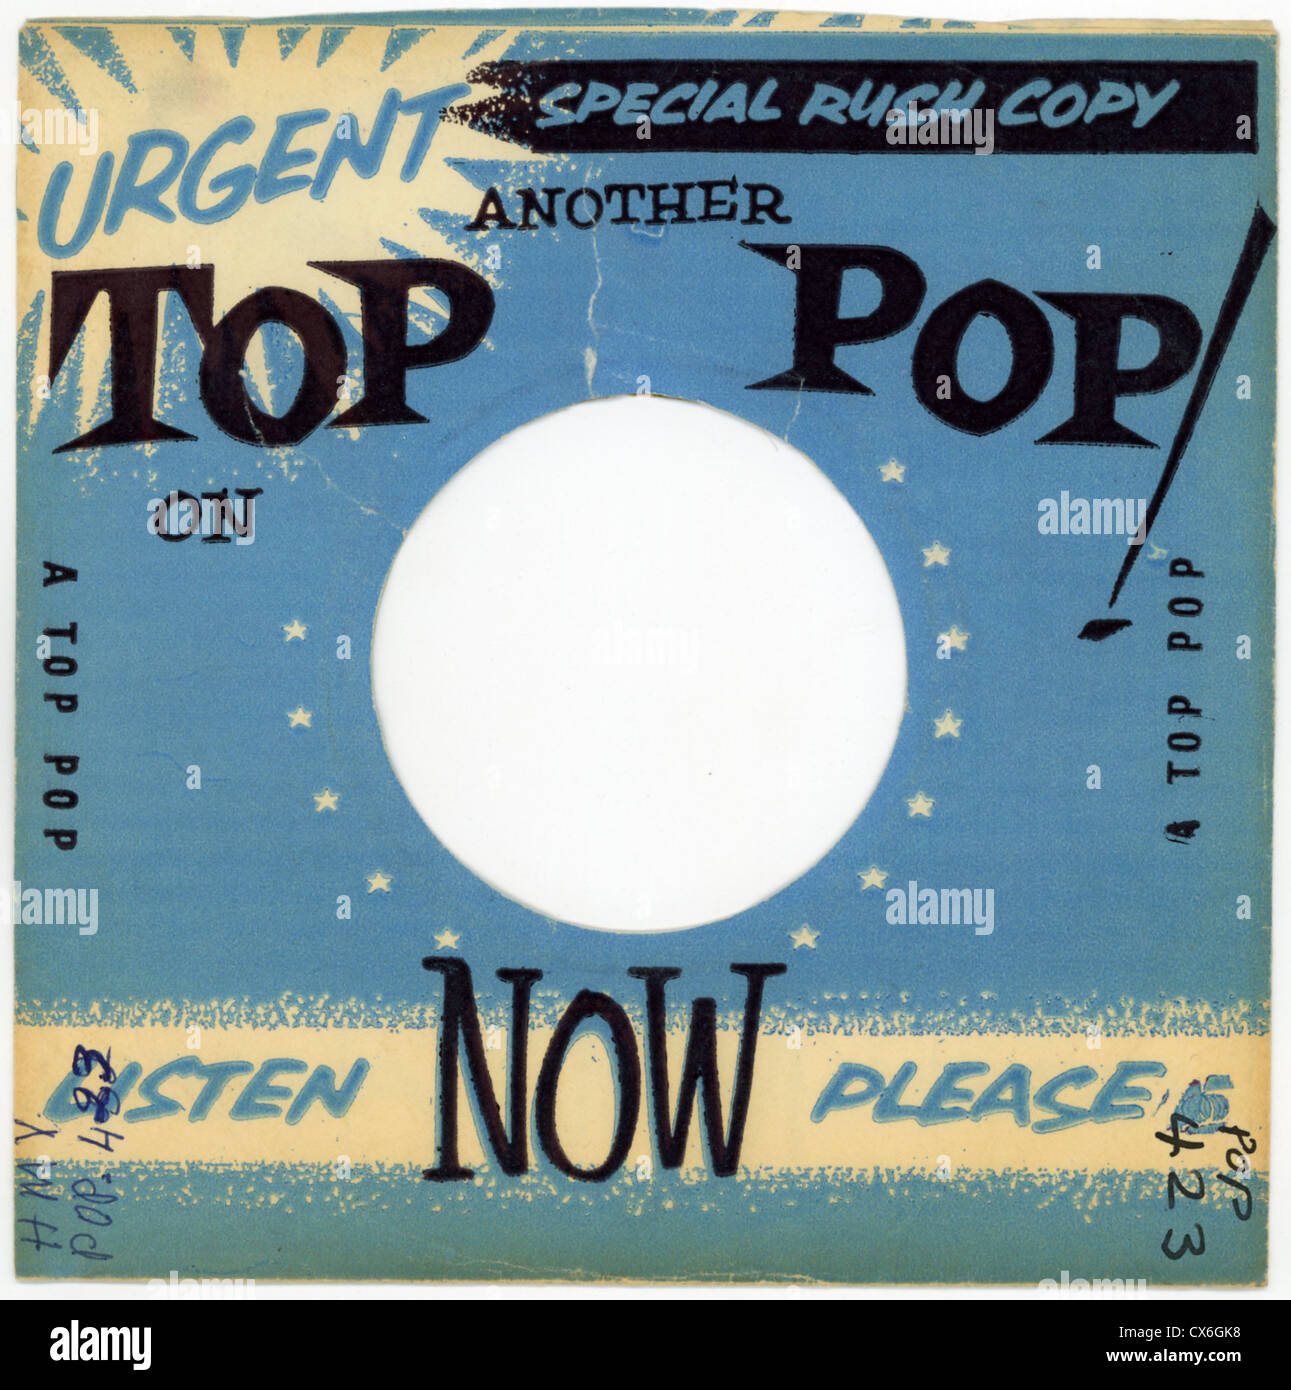 000487 - Top Pop 1962 Record Sleeve Stock Photo